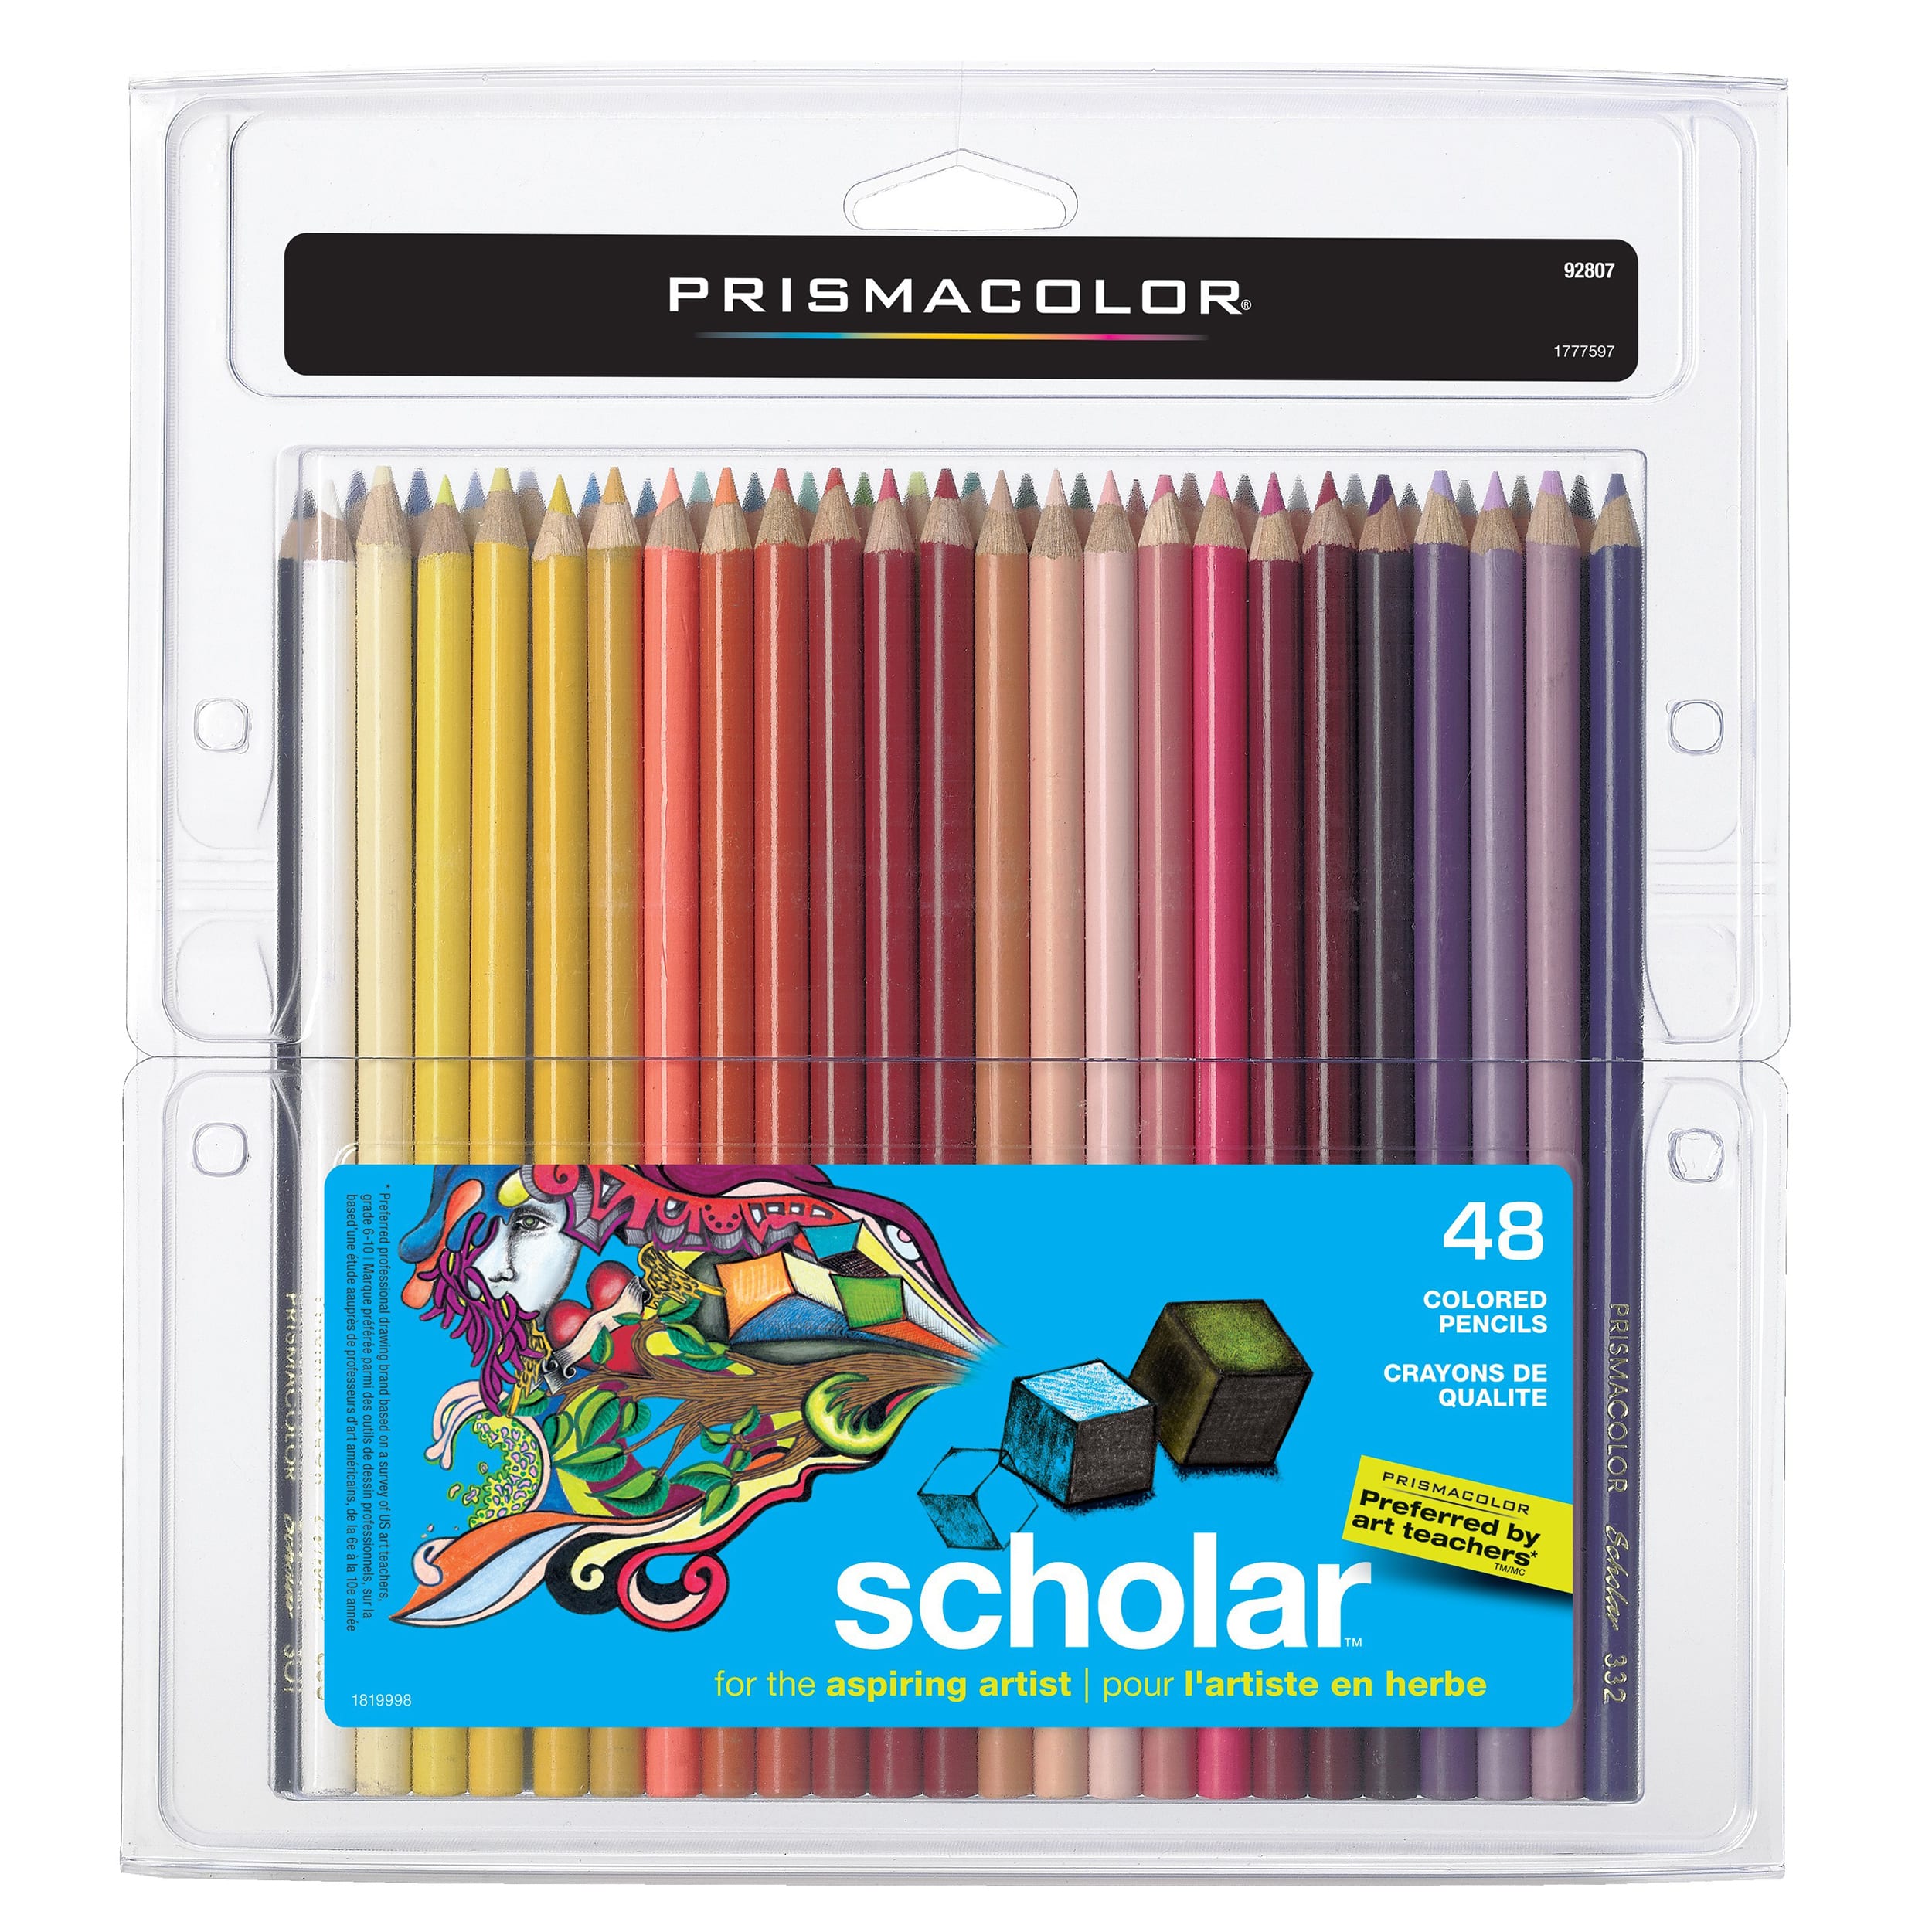 PrismaColor® Scholar™ Colored Pencils